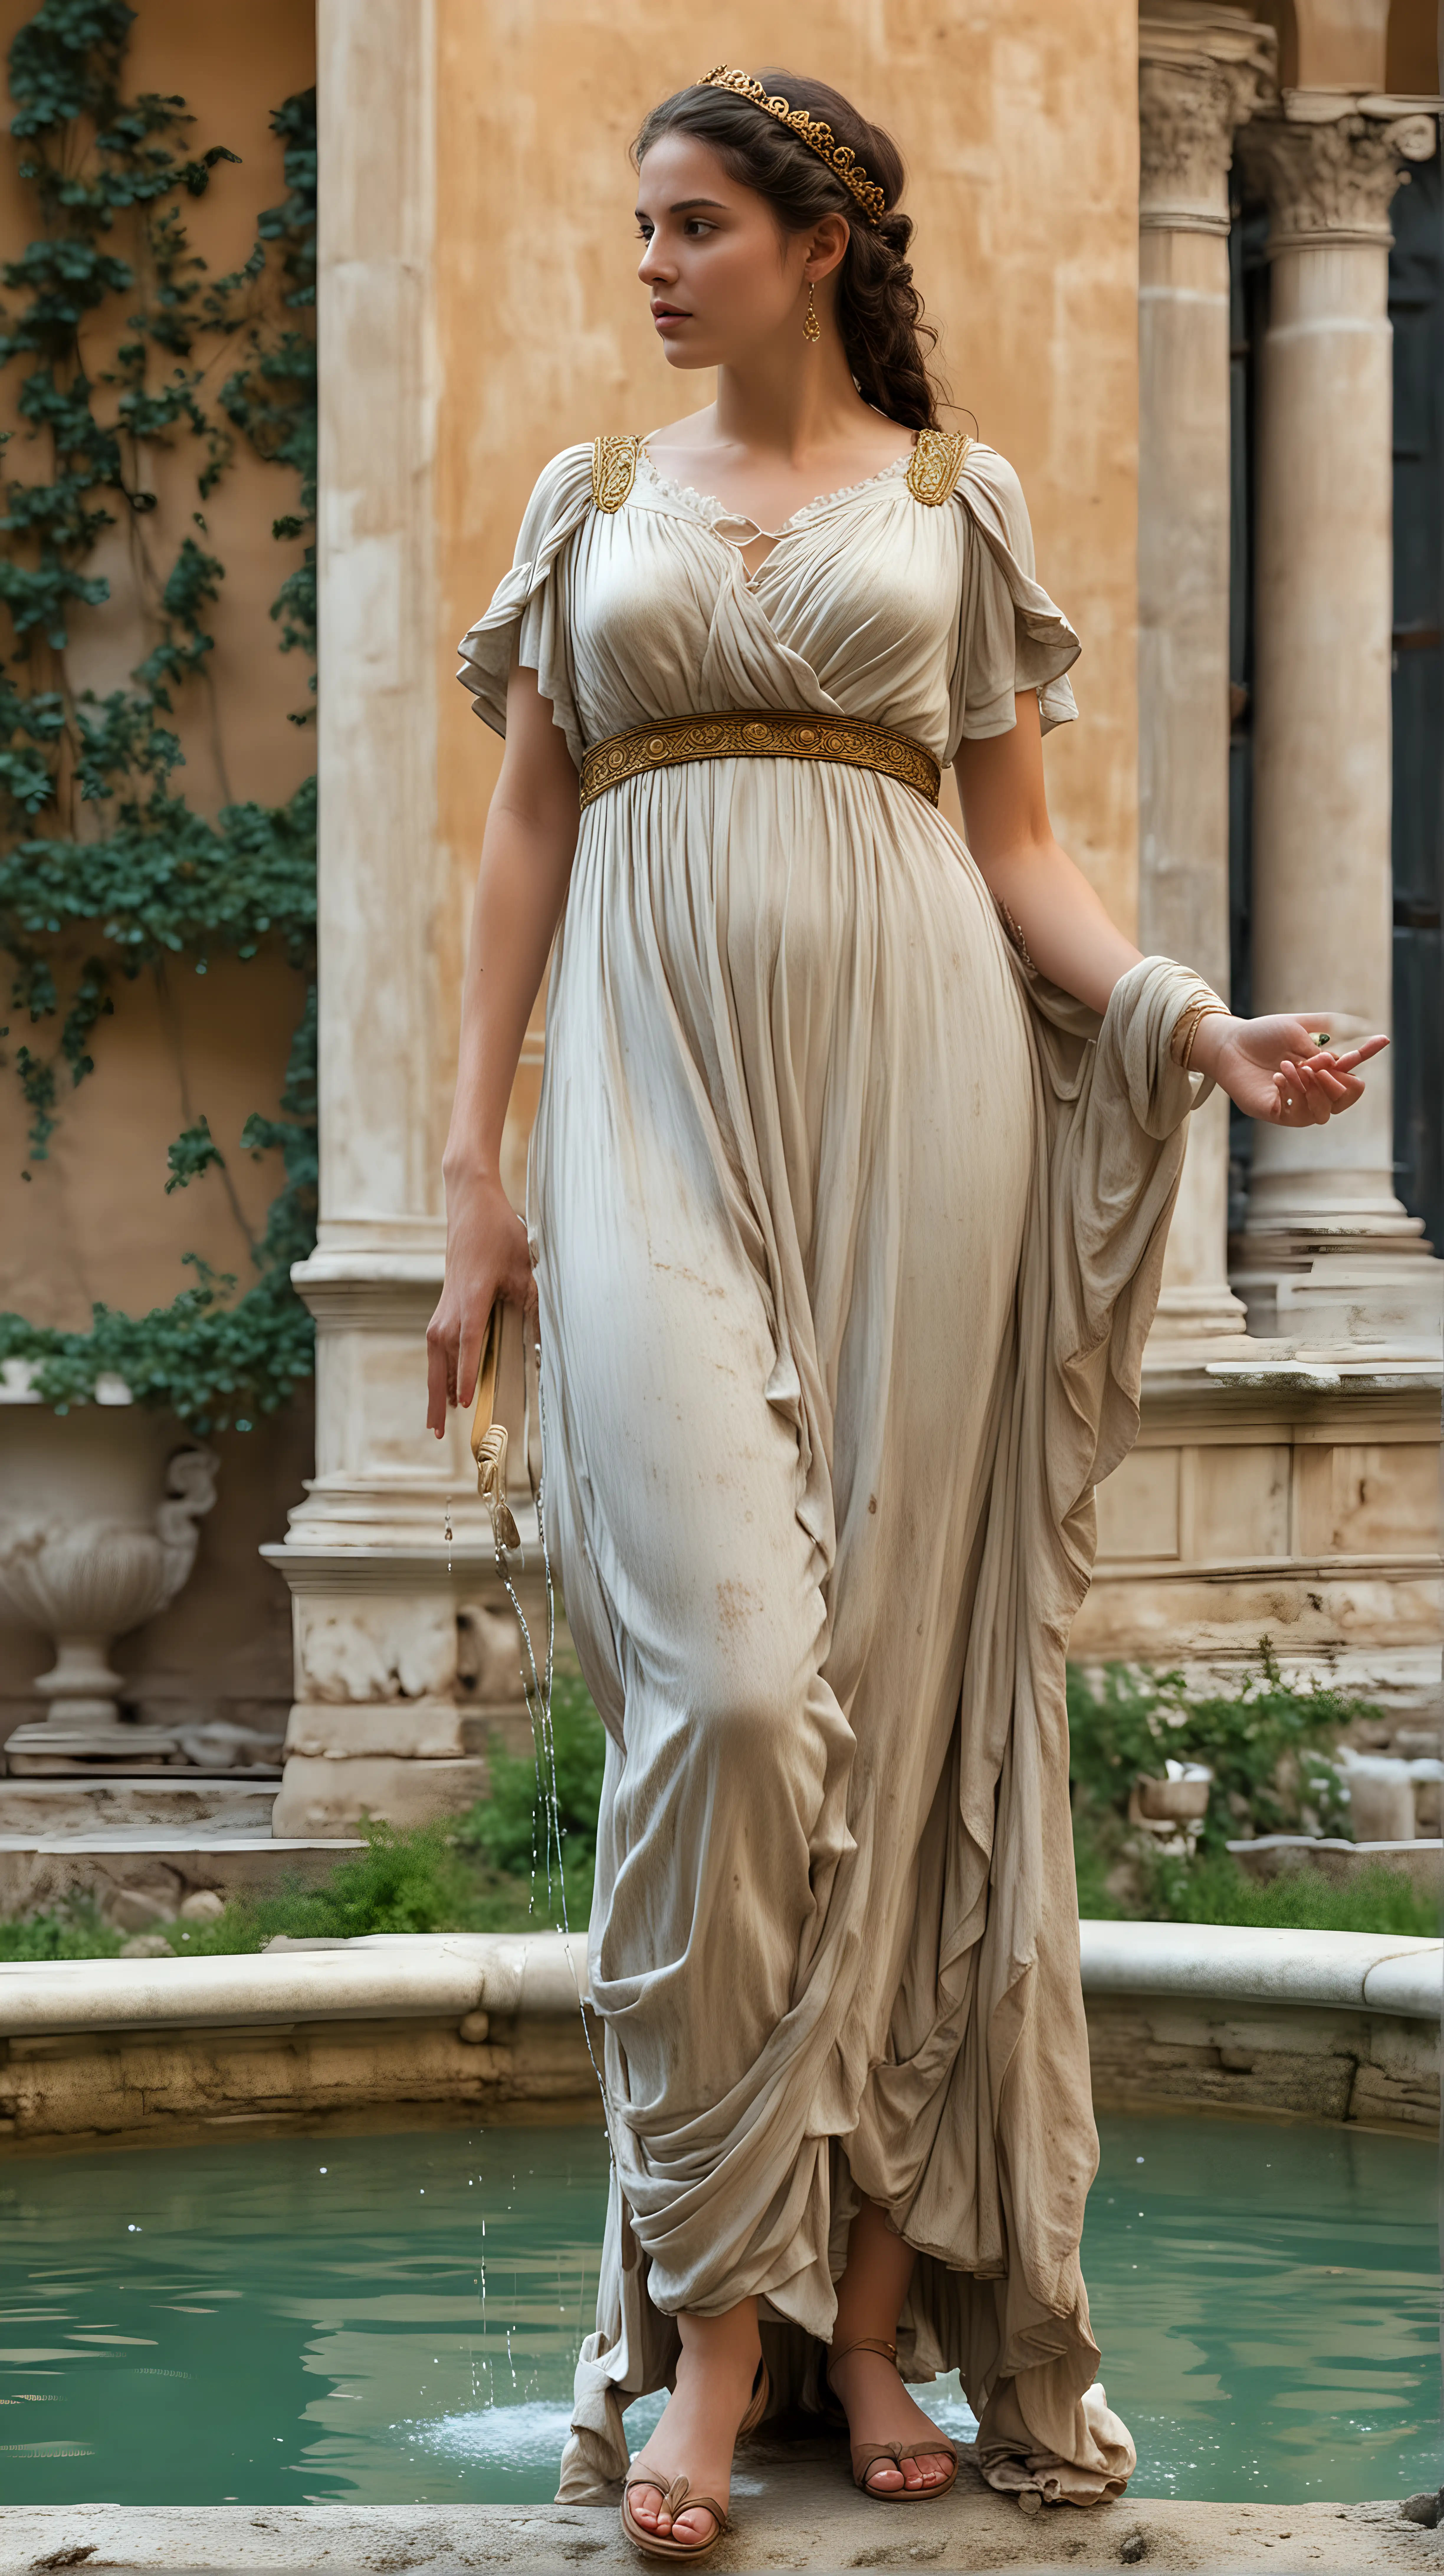 20 year old female ancient Rome aristocrat, fountain, villa